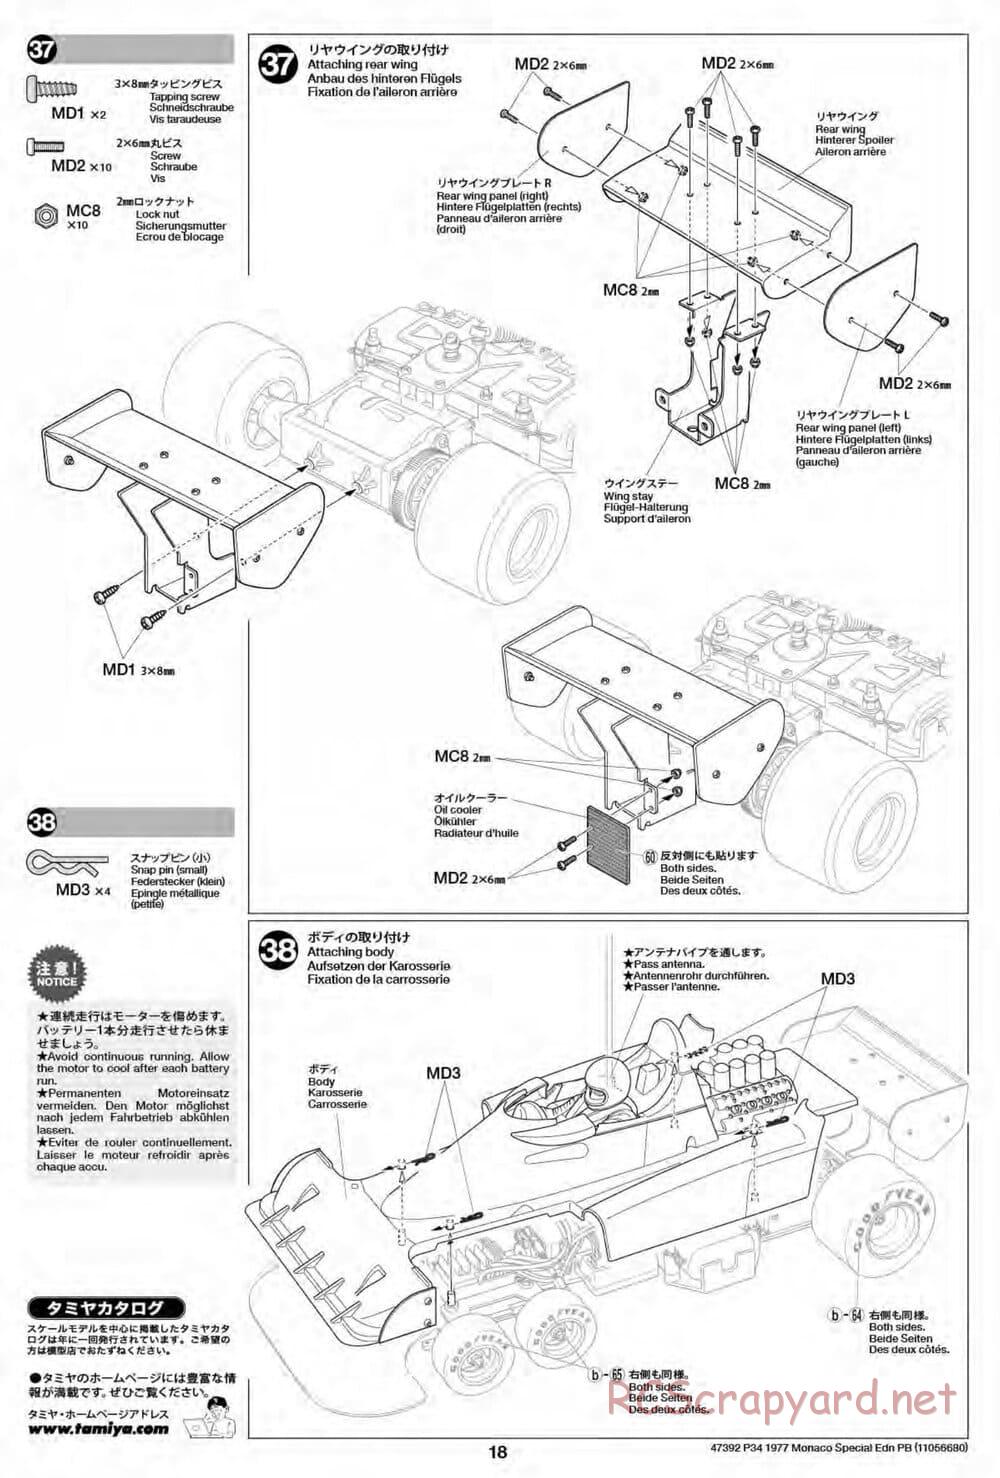 Tamiya - Tyrrell P34 Six Wheeler 1977 Monaco GP - F103-6W Chassis - Manual - Page 18